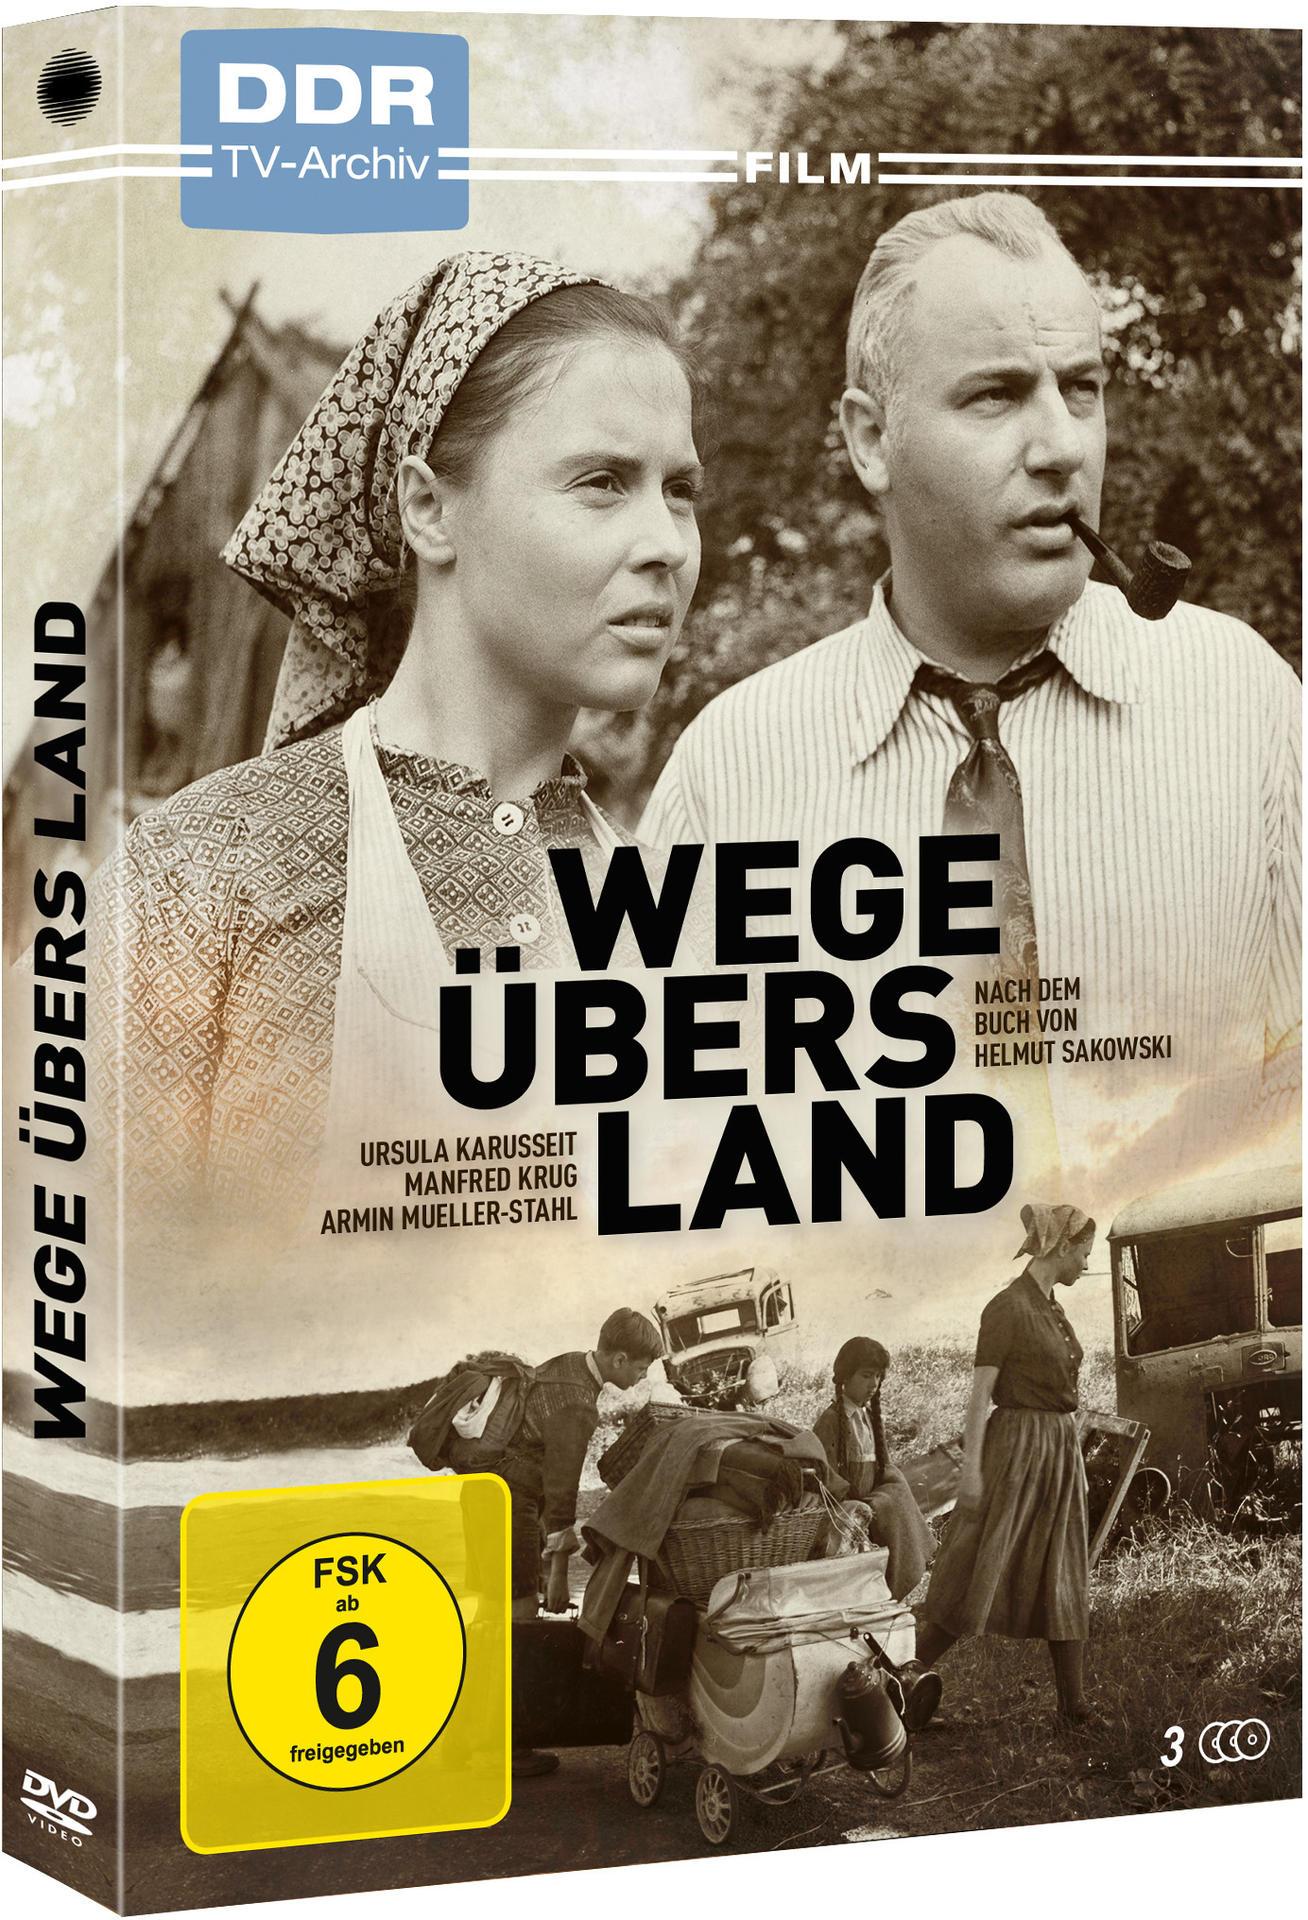 Land DVD Wege TV-Archiv DDR übers -